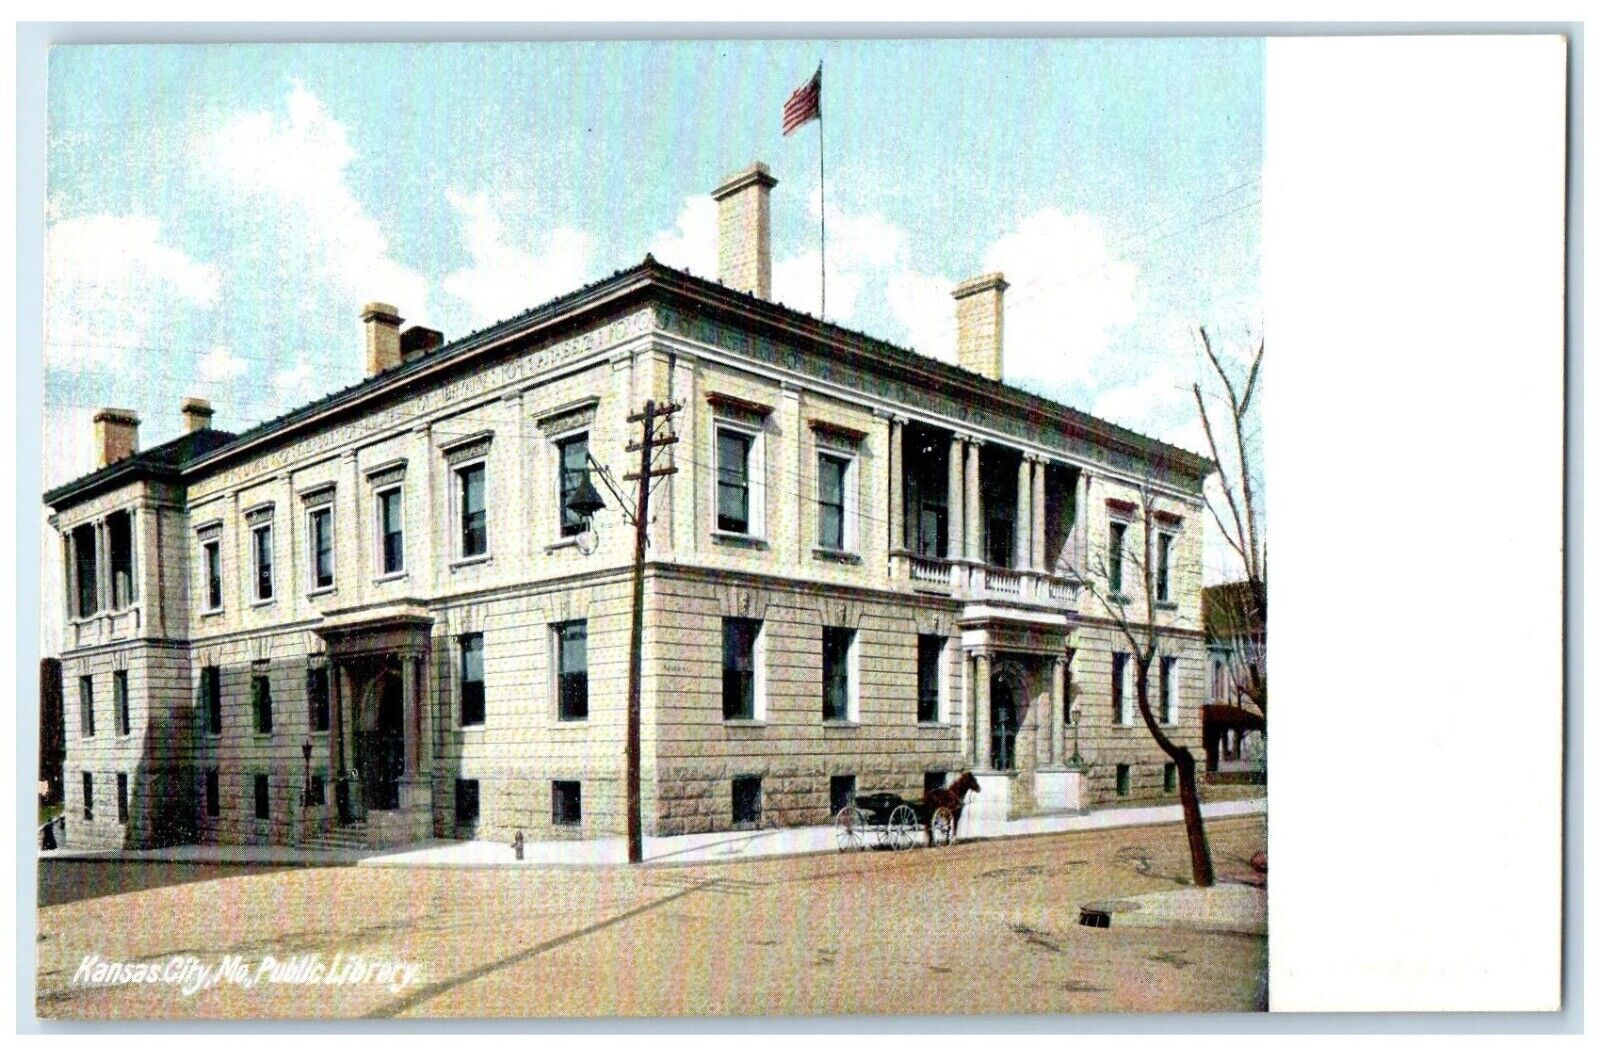 Kansas City Missouri MO Postcard Public Library Exterior Building c1905 Vintage